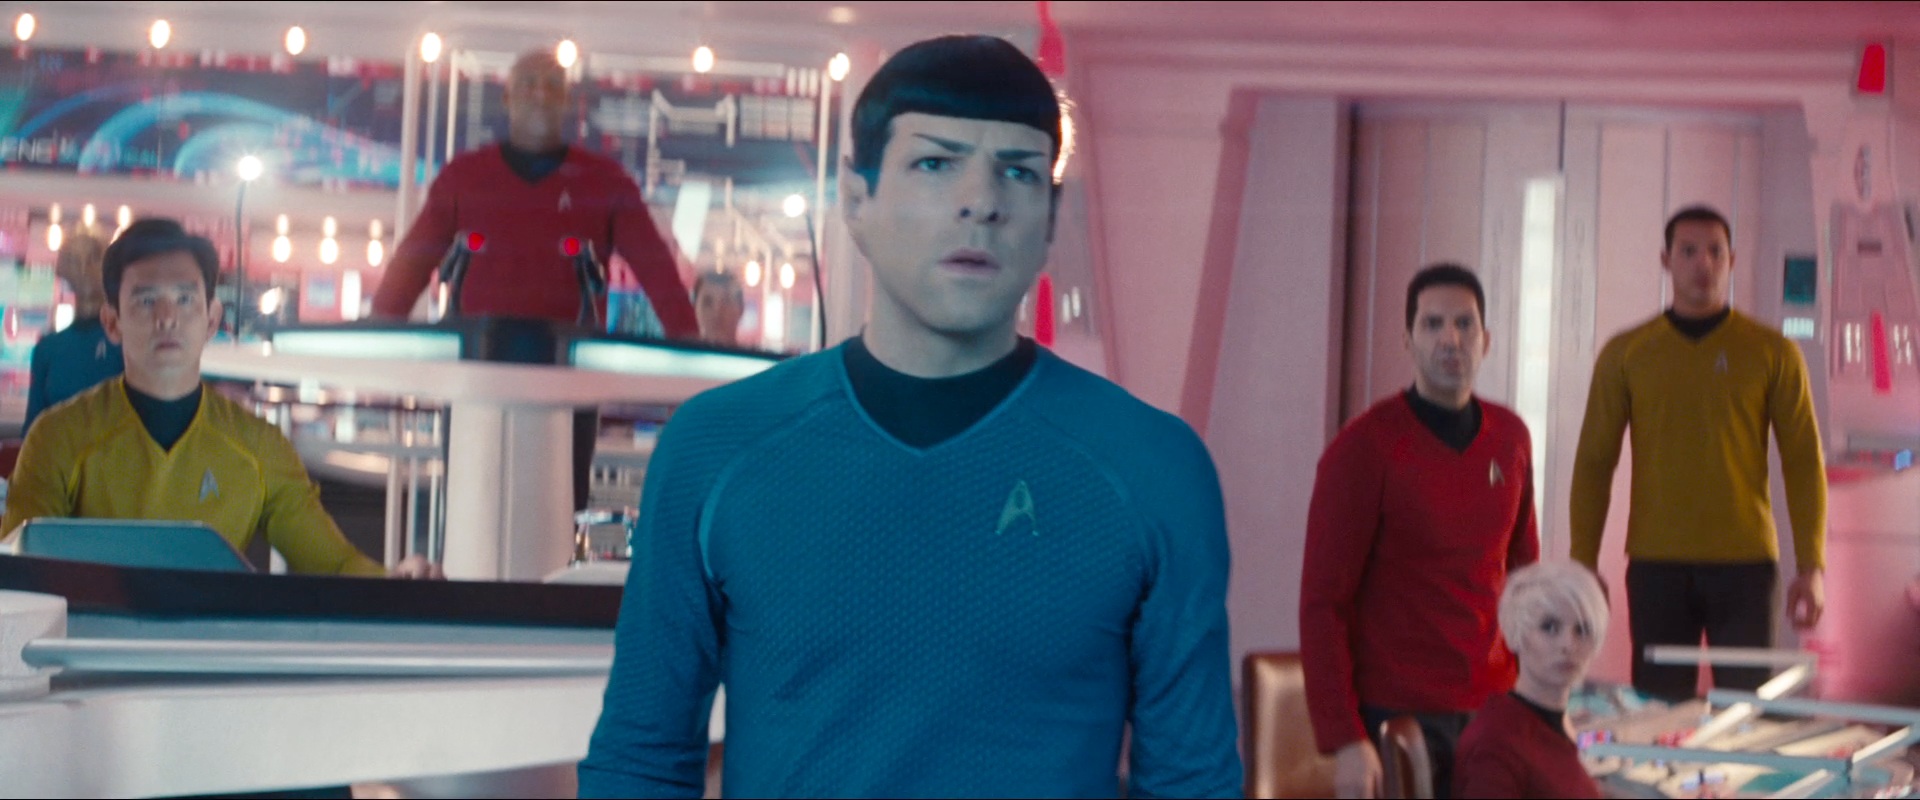 New Image From Star Trek Into Darkness + UPDATE: Villain 